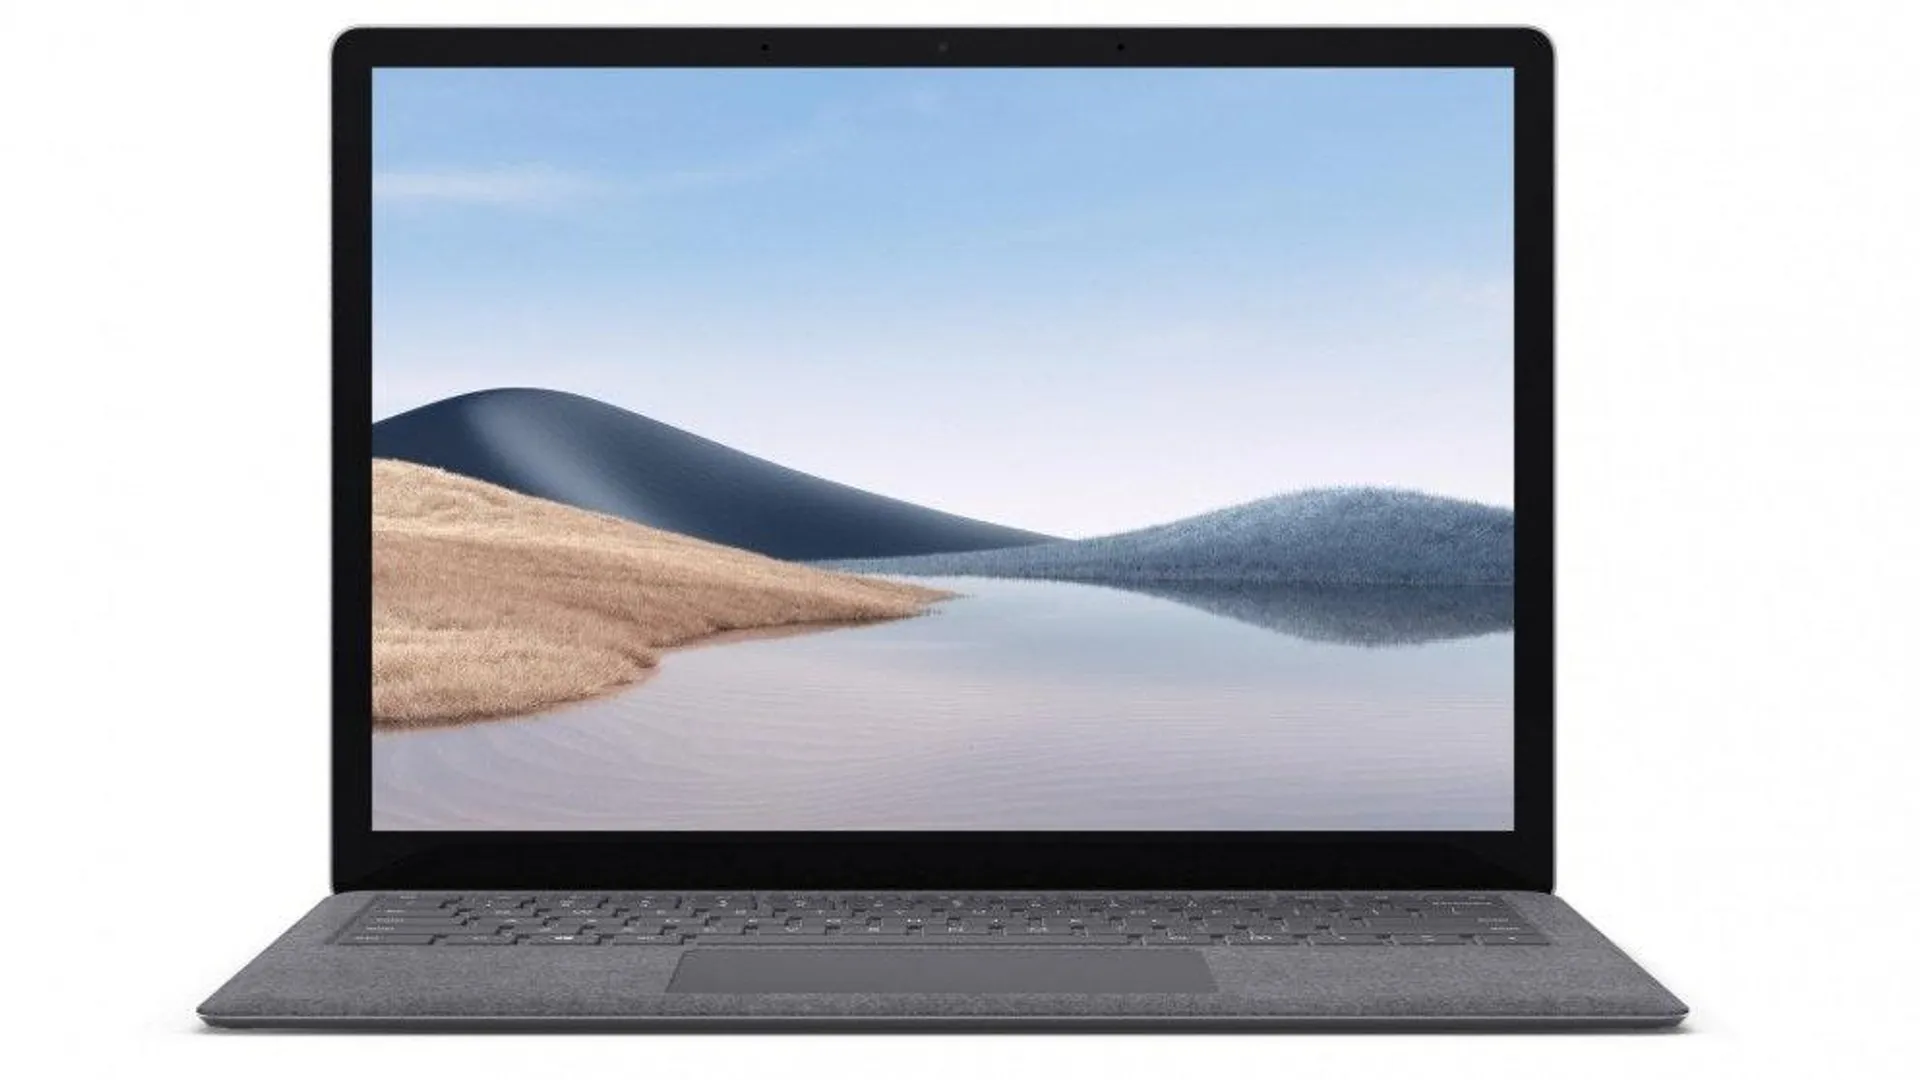 Microsoft Surface Laptop 4 13.5-inch Ryzen 5/8GB/256GB SSD Laptop - Platinum